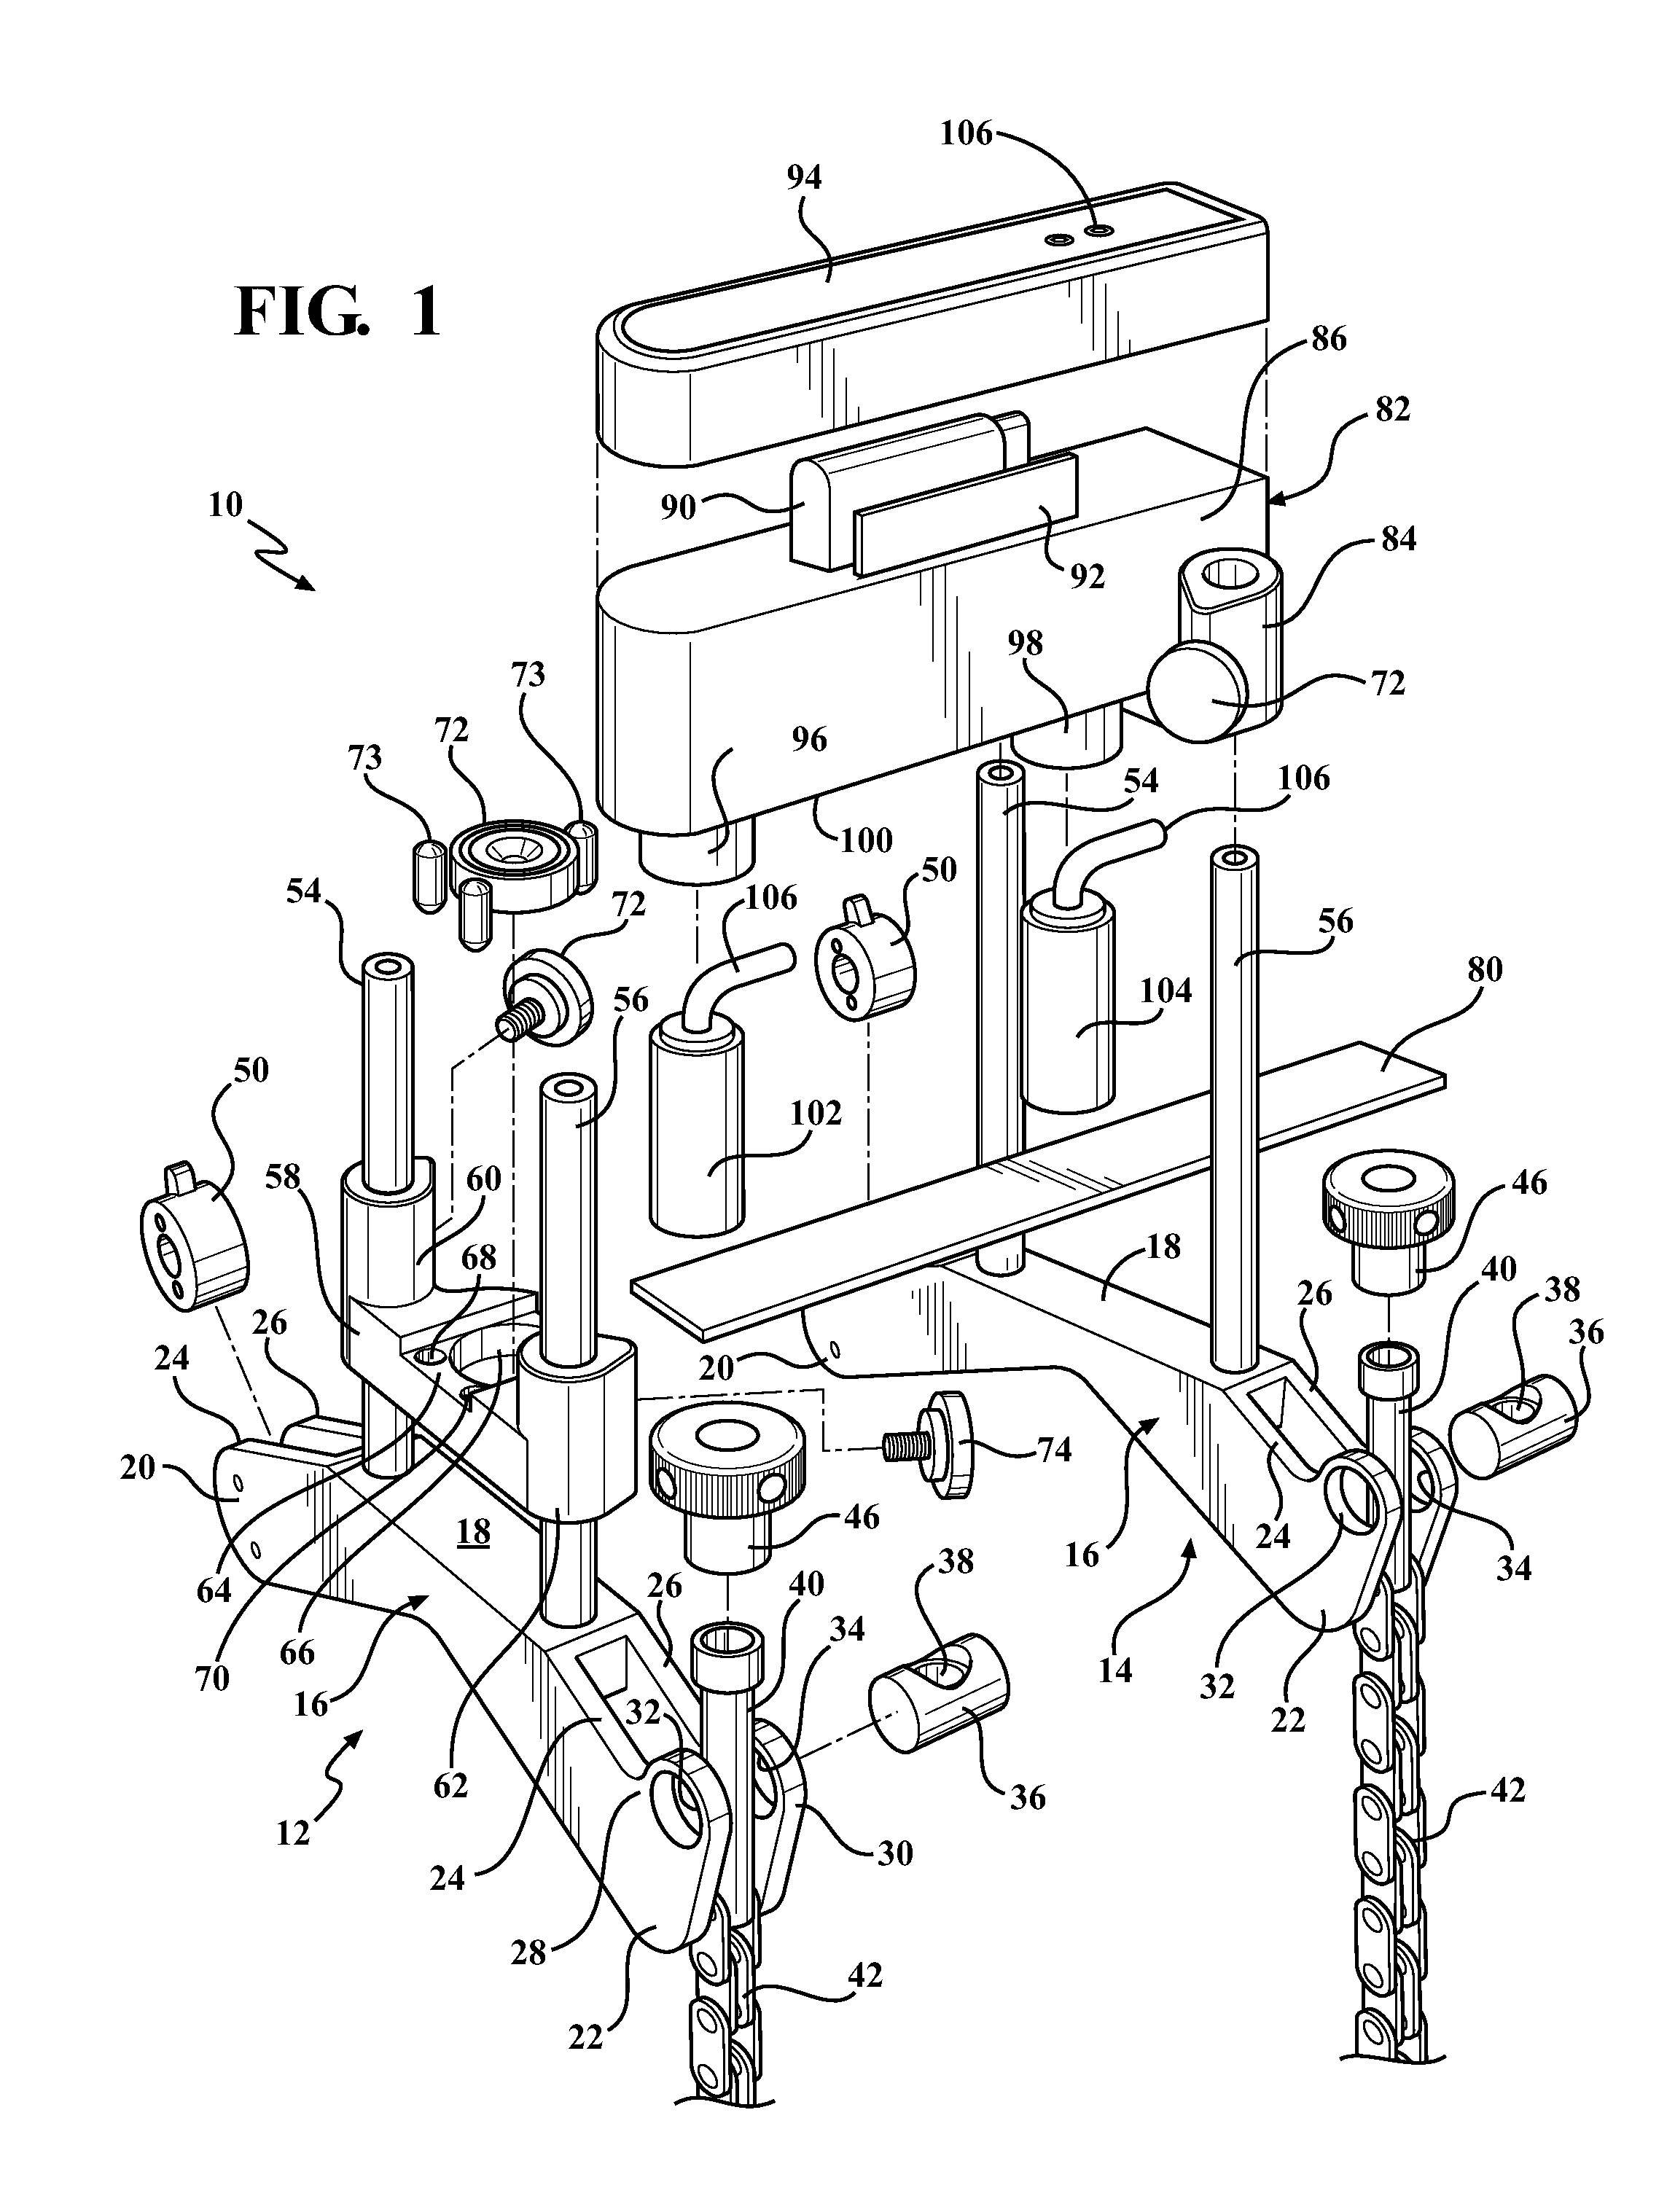 Alignment apparatus and method